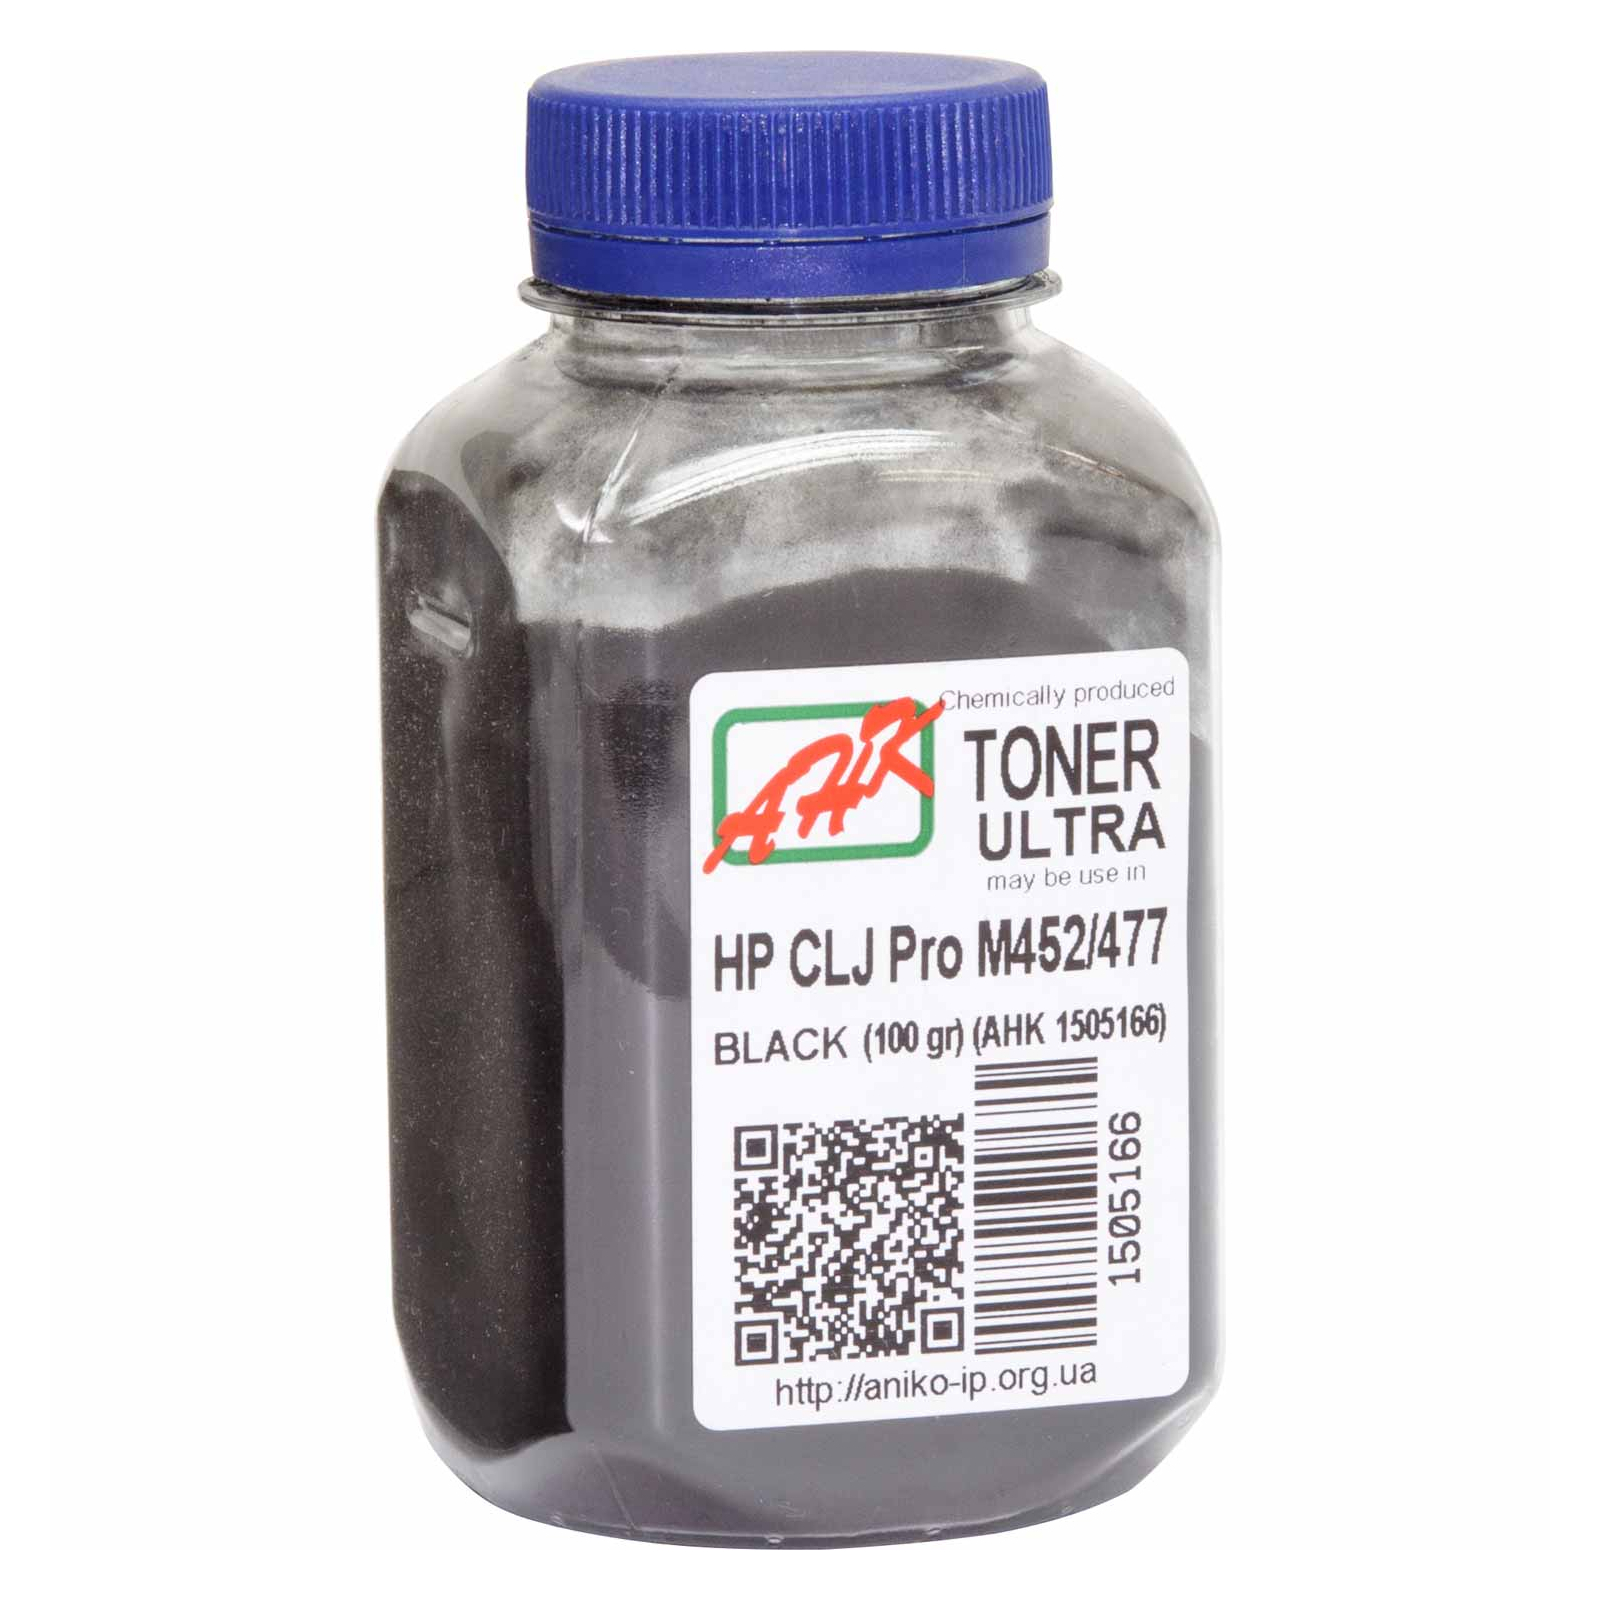 Тонер HP CLJ Pro M452/477 Black 100г ULTRA COLOR AHK (1505166)